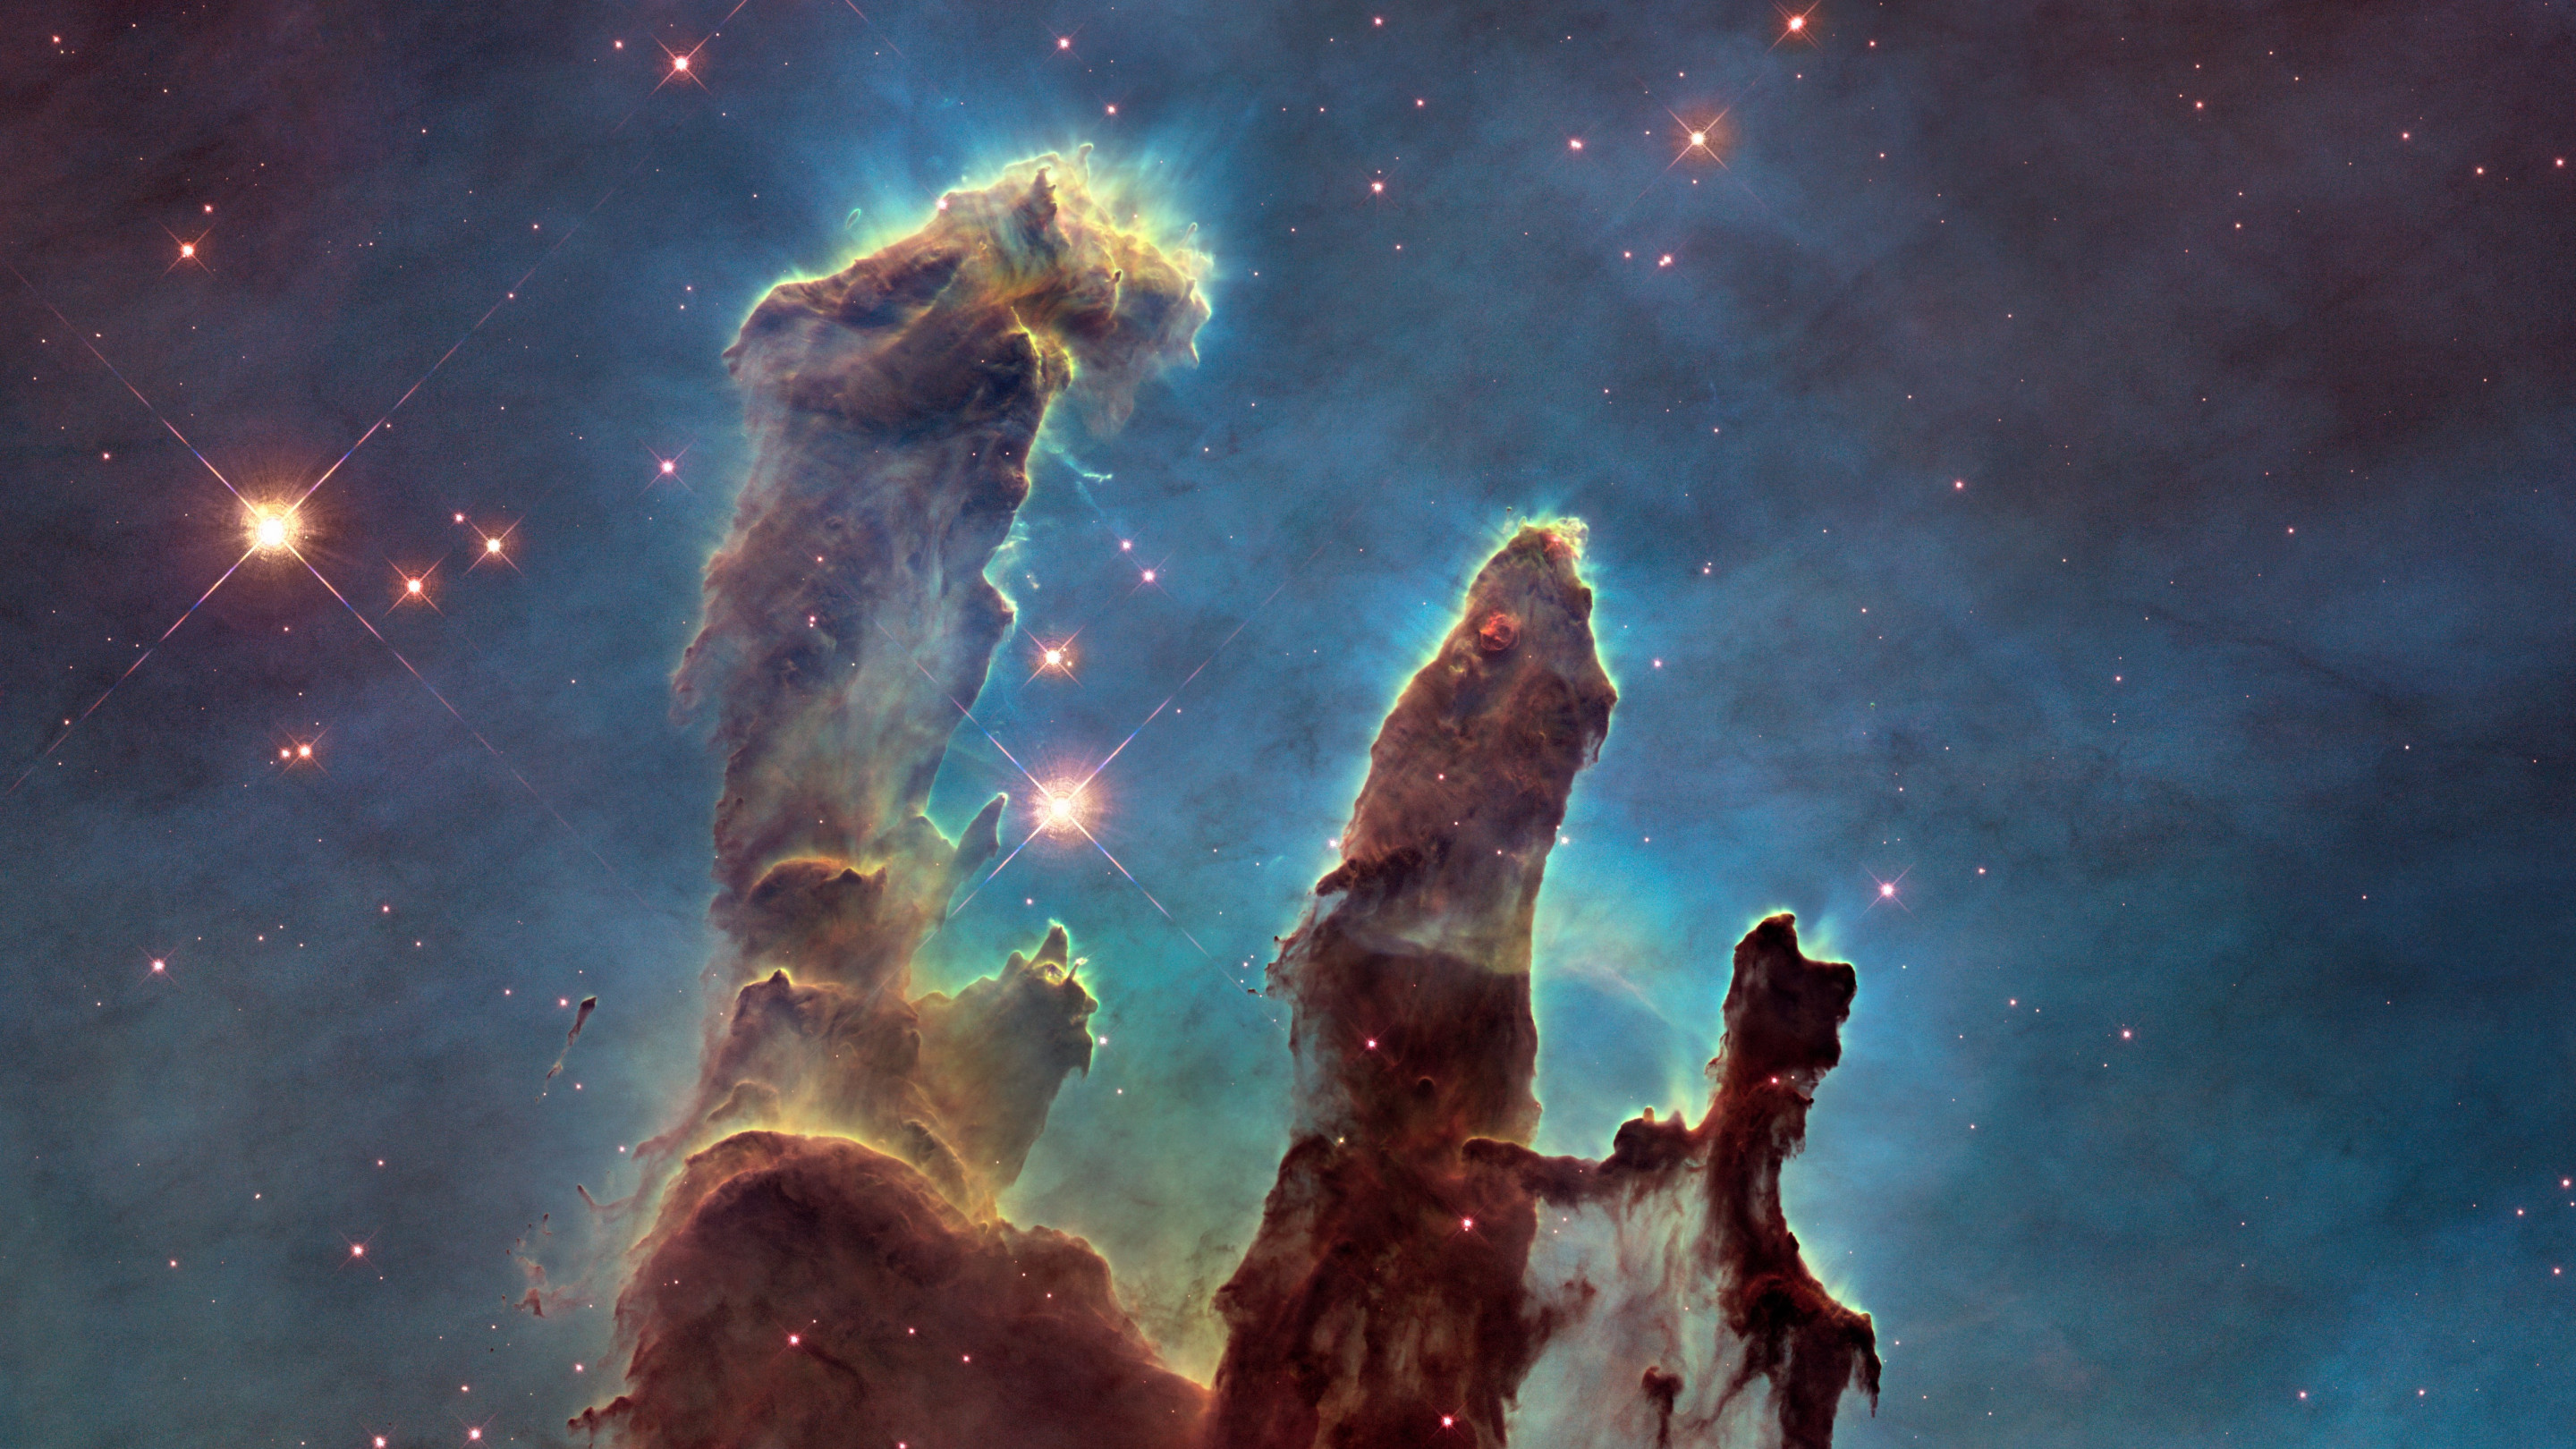 The Eagle Nebula's Pillars of Creation wallpaper 2880x1620